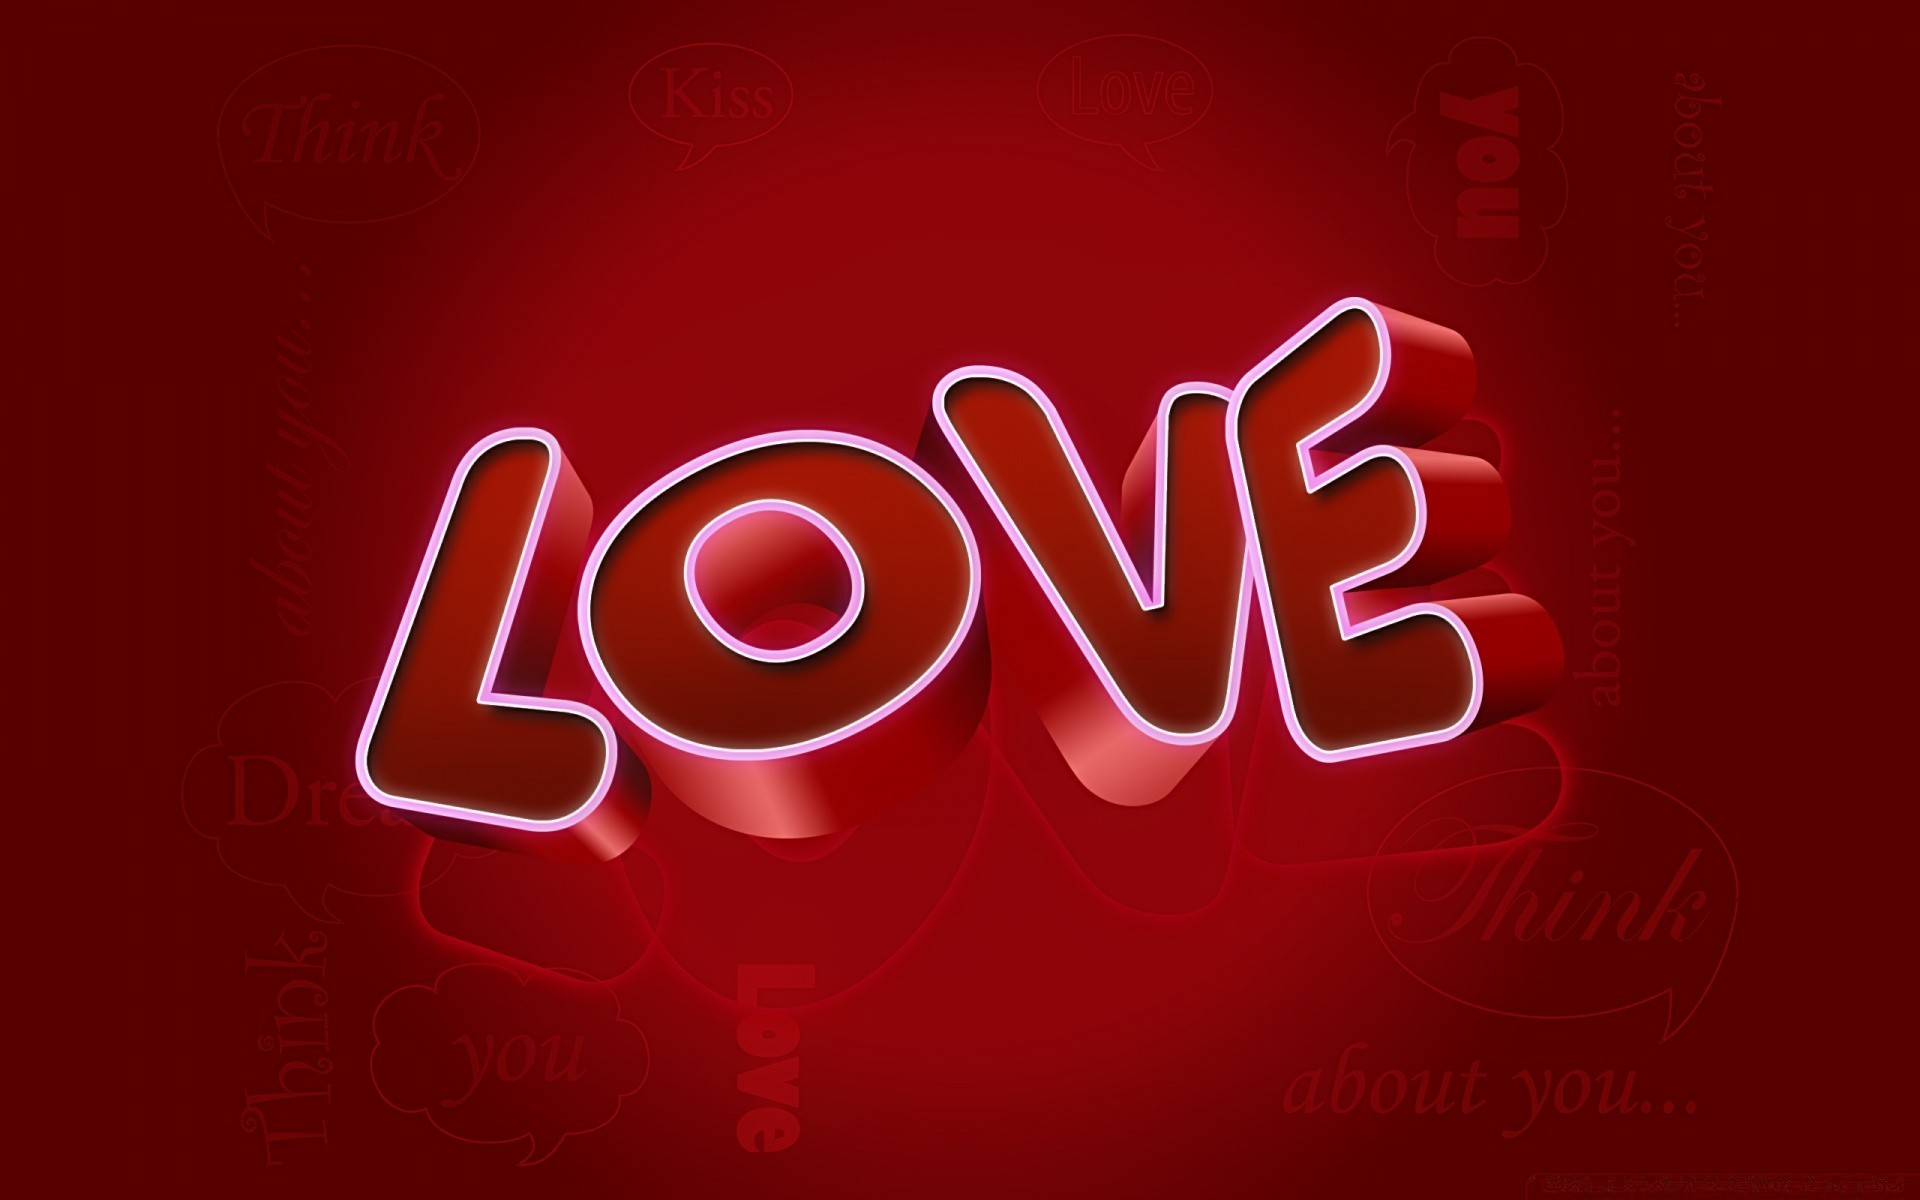 hearts love symbol romance heart desktop design illustration romantic abstract greeting celebration card image art shape sign